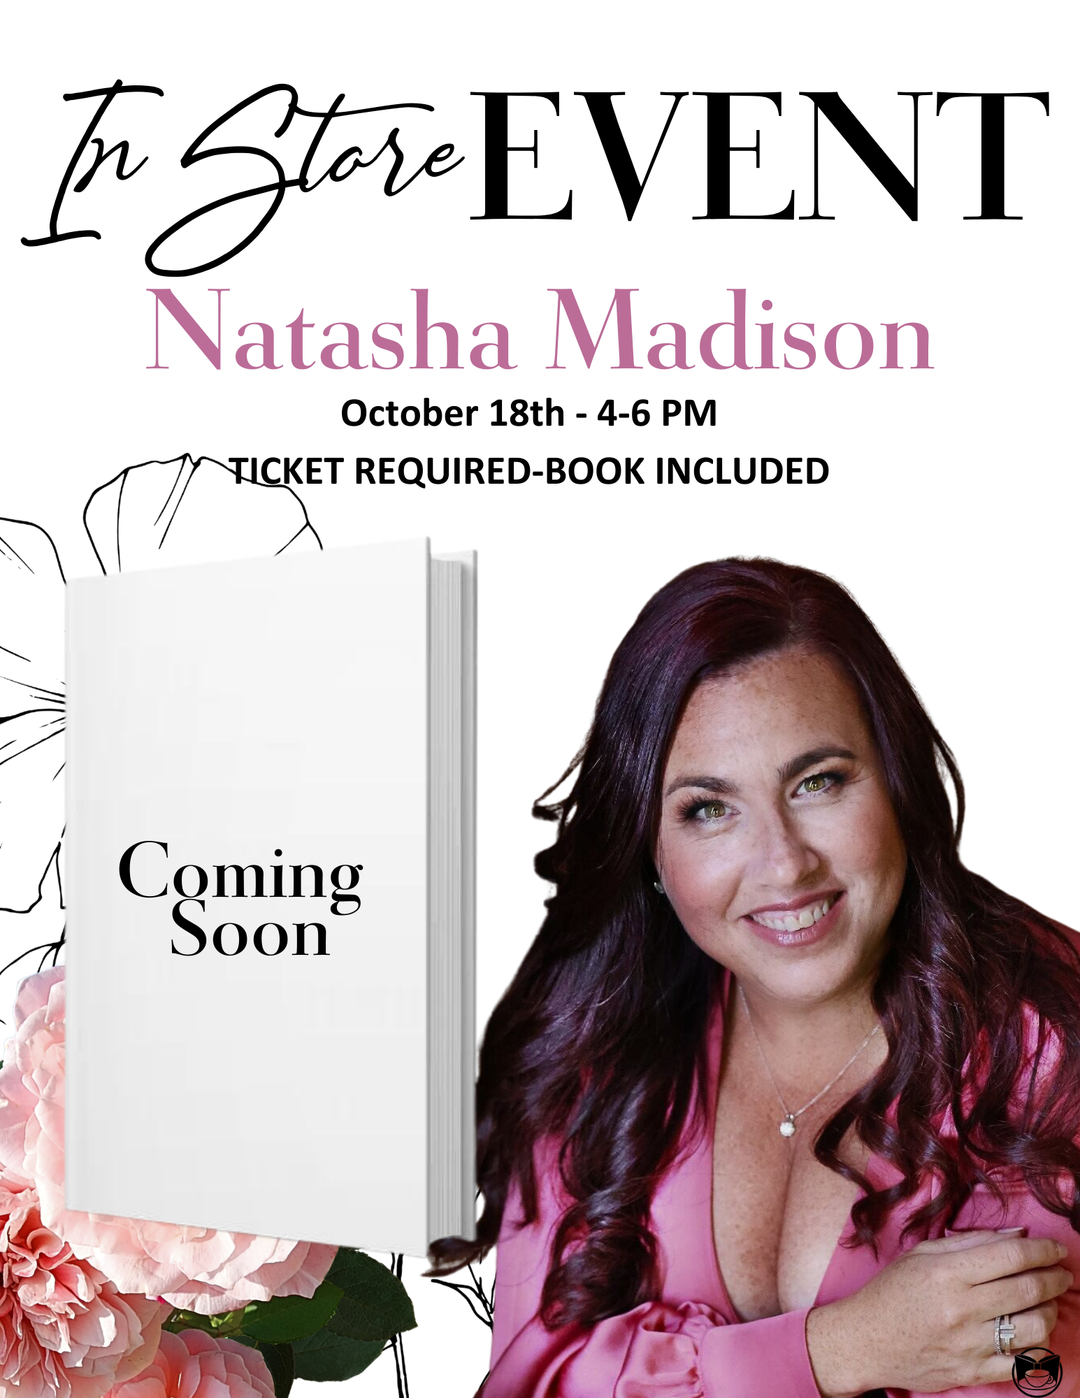 Natasha Madison Signing Event Ticket - October 18th - 4-6pm